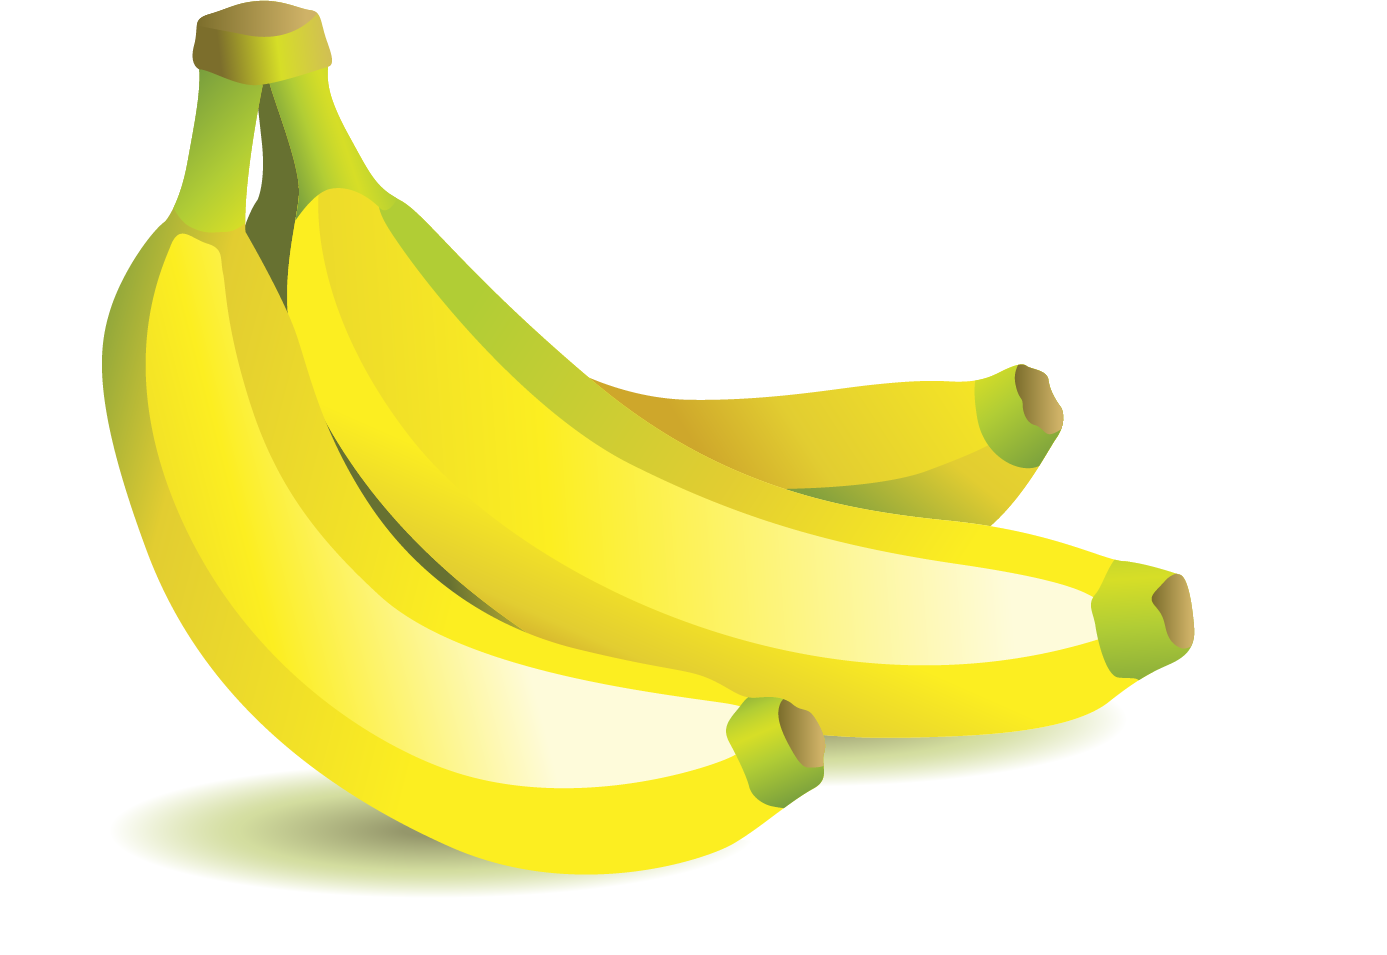 Clusterof Yellow Bananas Vector Illustration PNG image